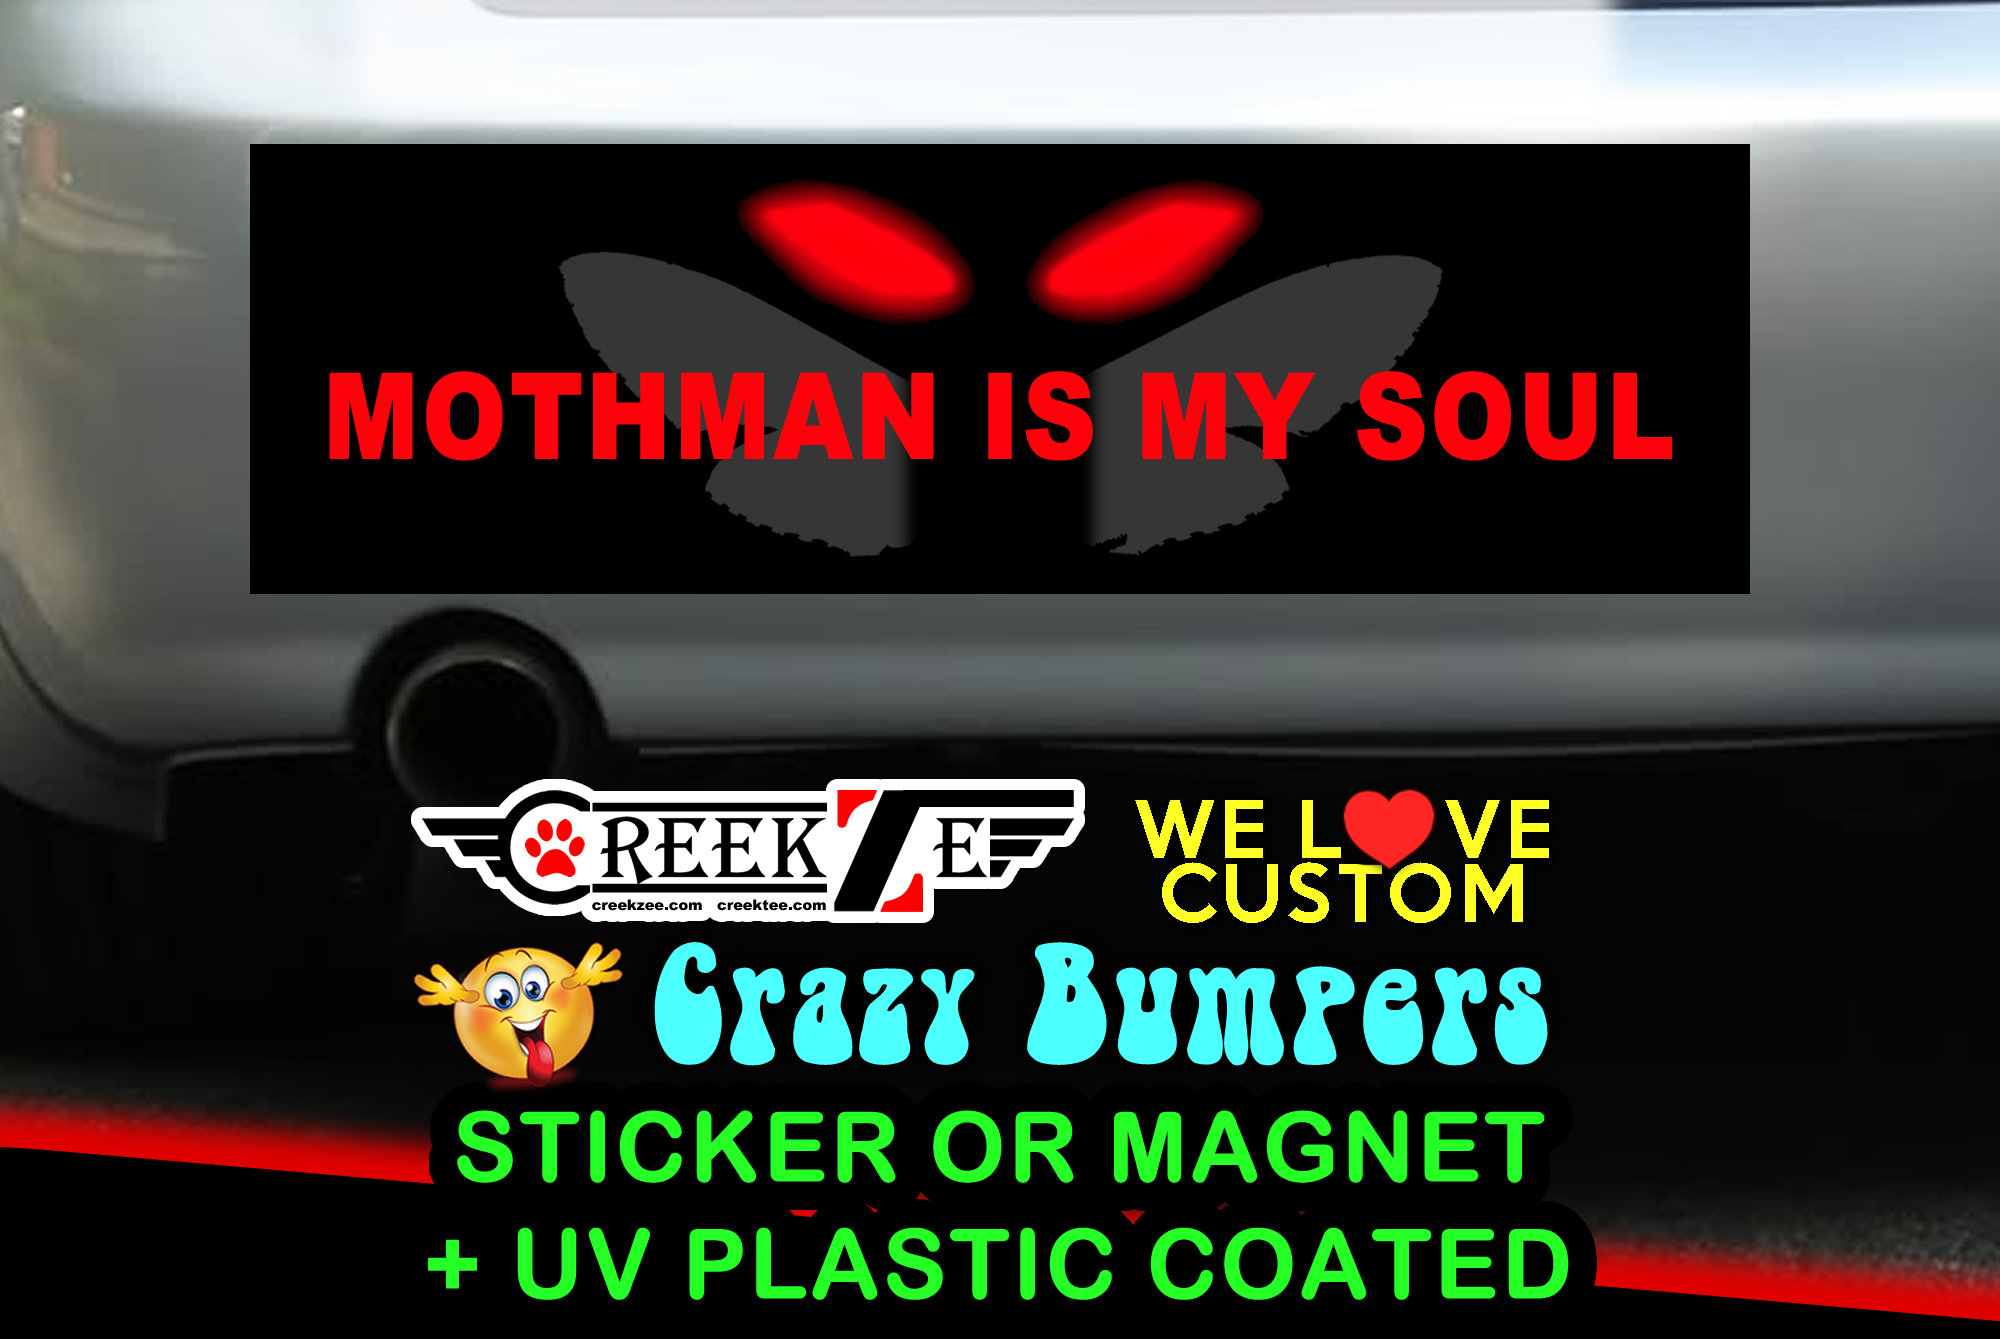 Mothman is my soul Bumper Sticker or Magnet in new sizes, 4